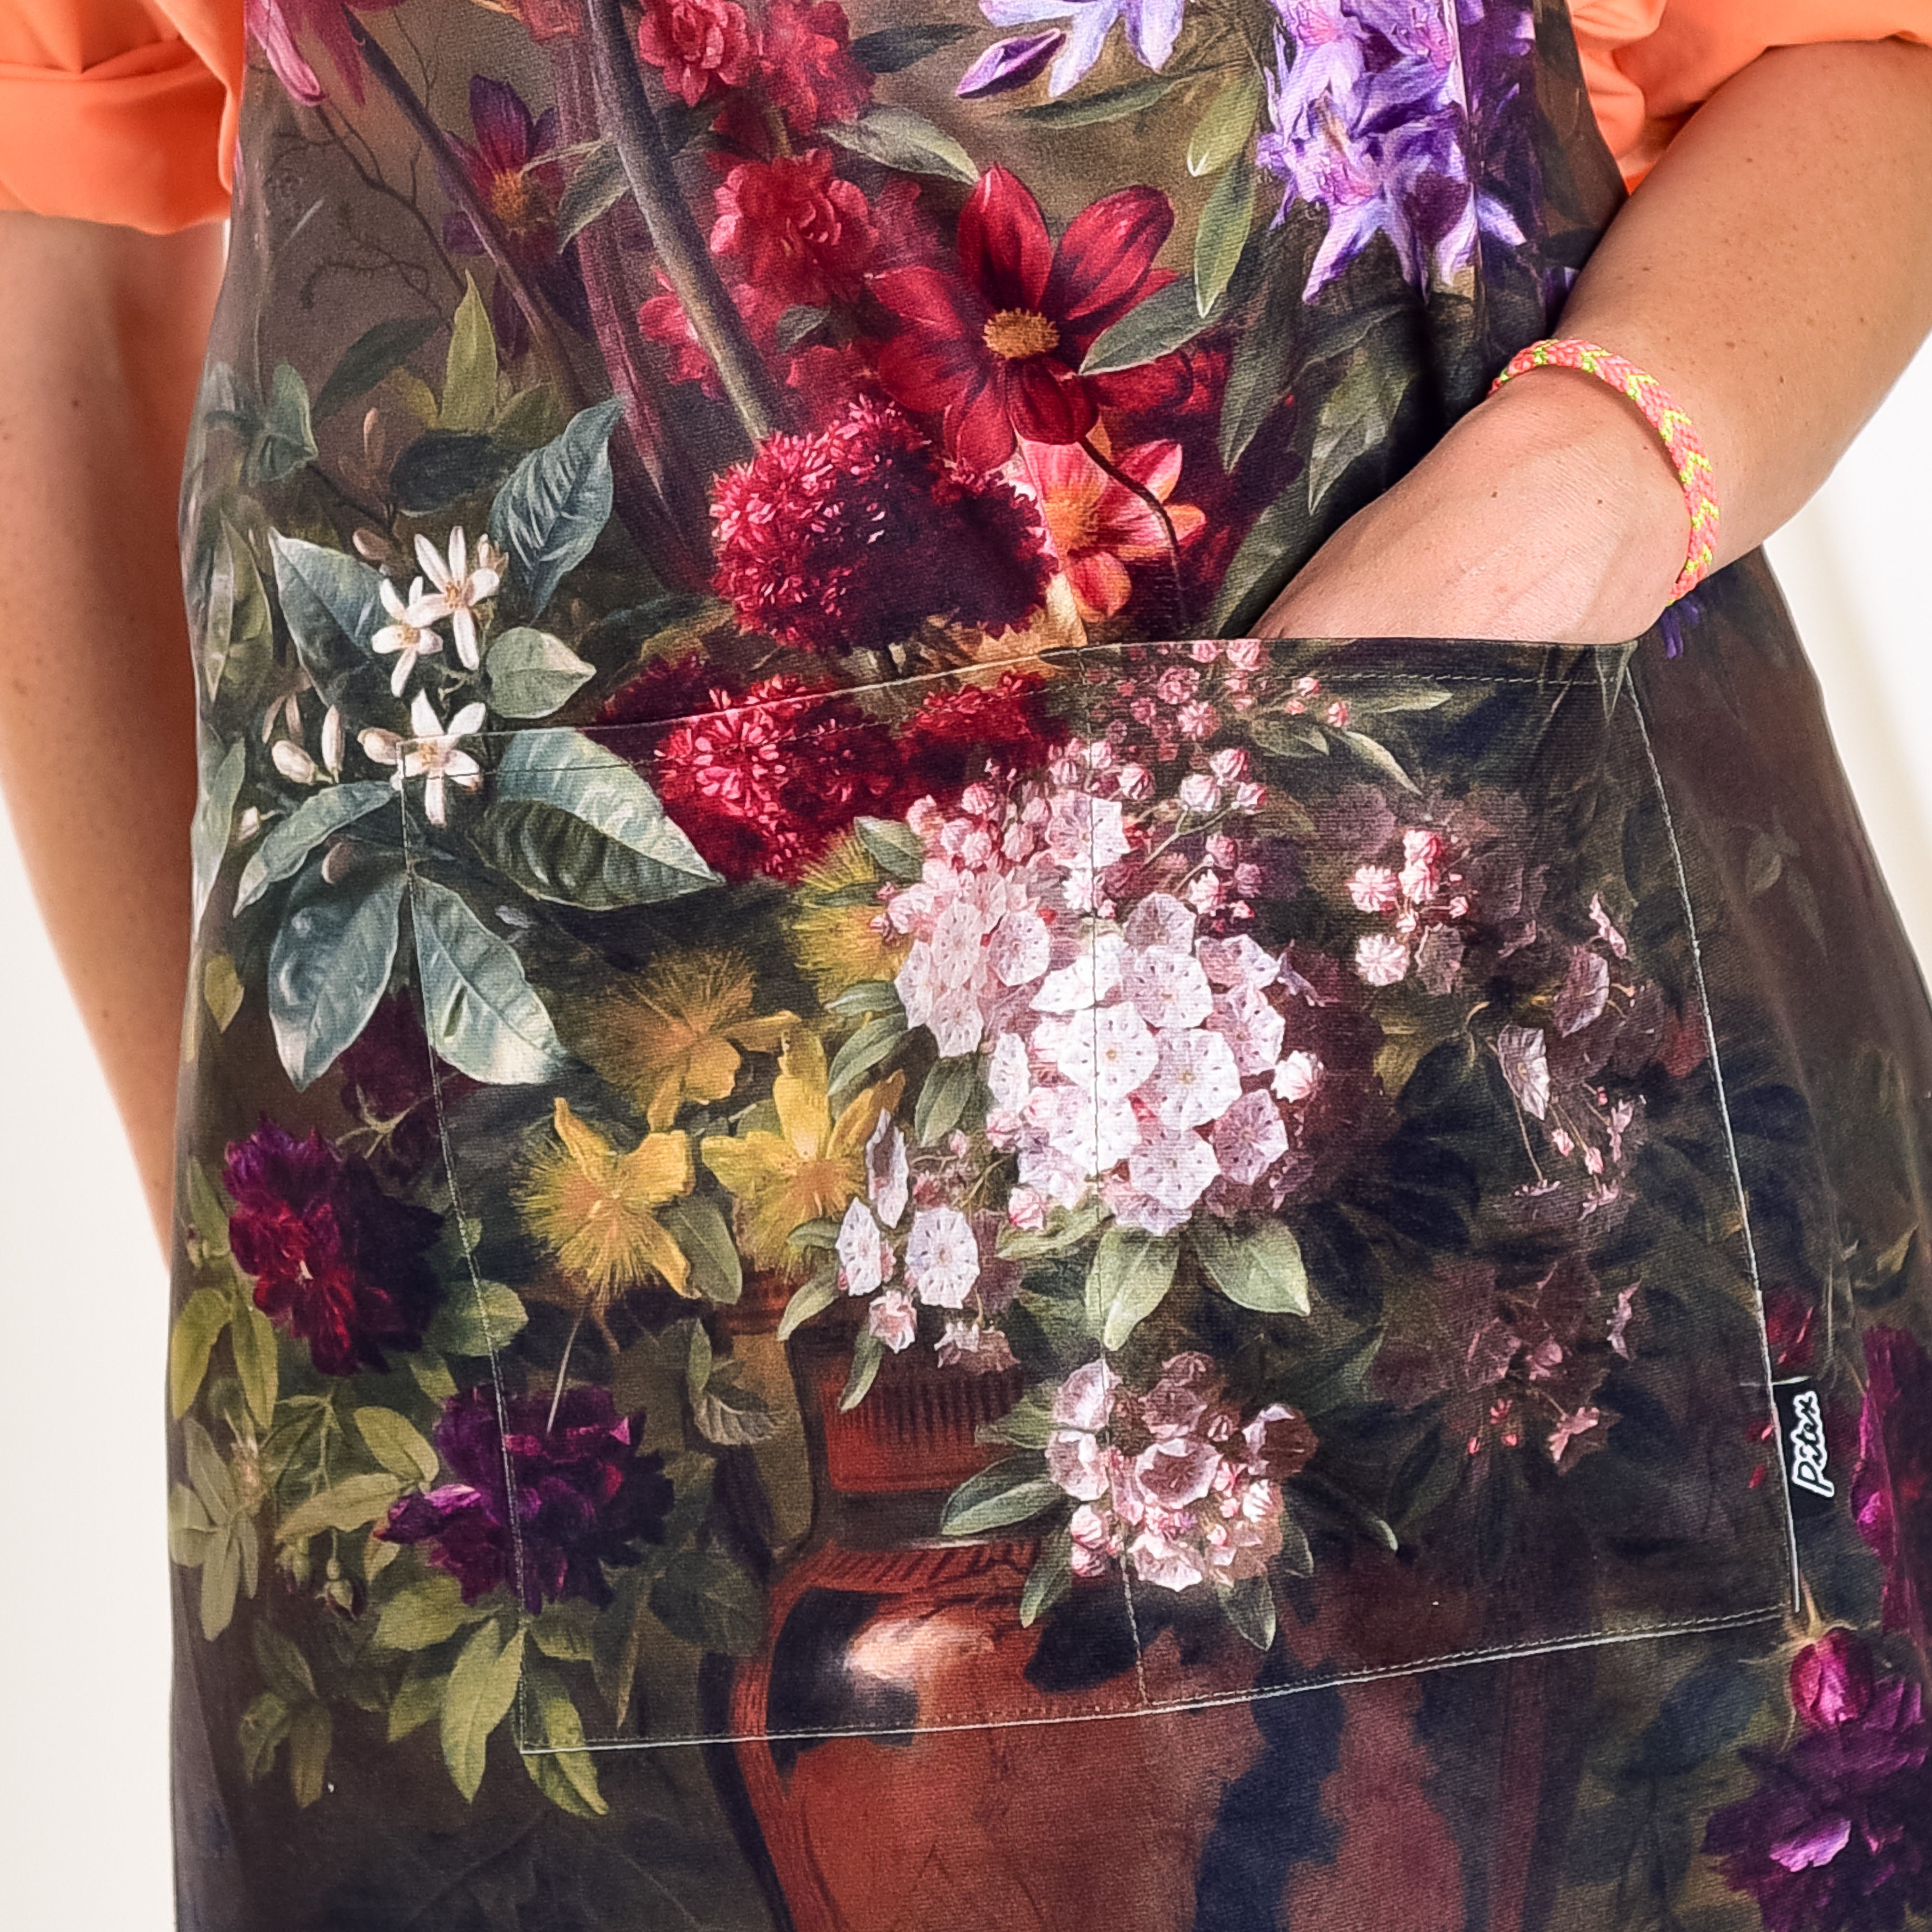 Prijuostė Gregorius van Os "Still Life with Flowers in a Greek Vase"